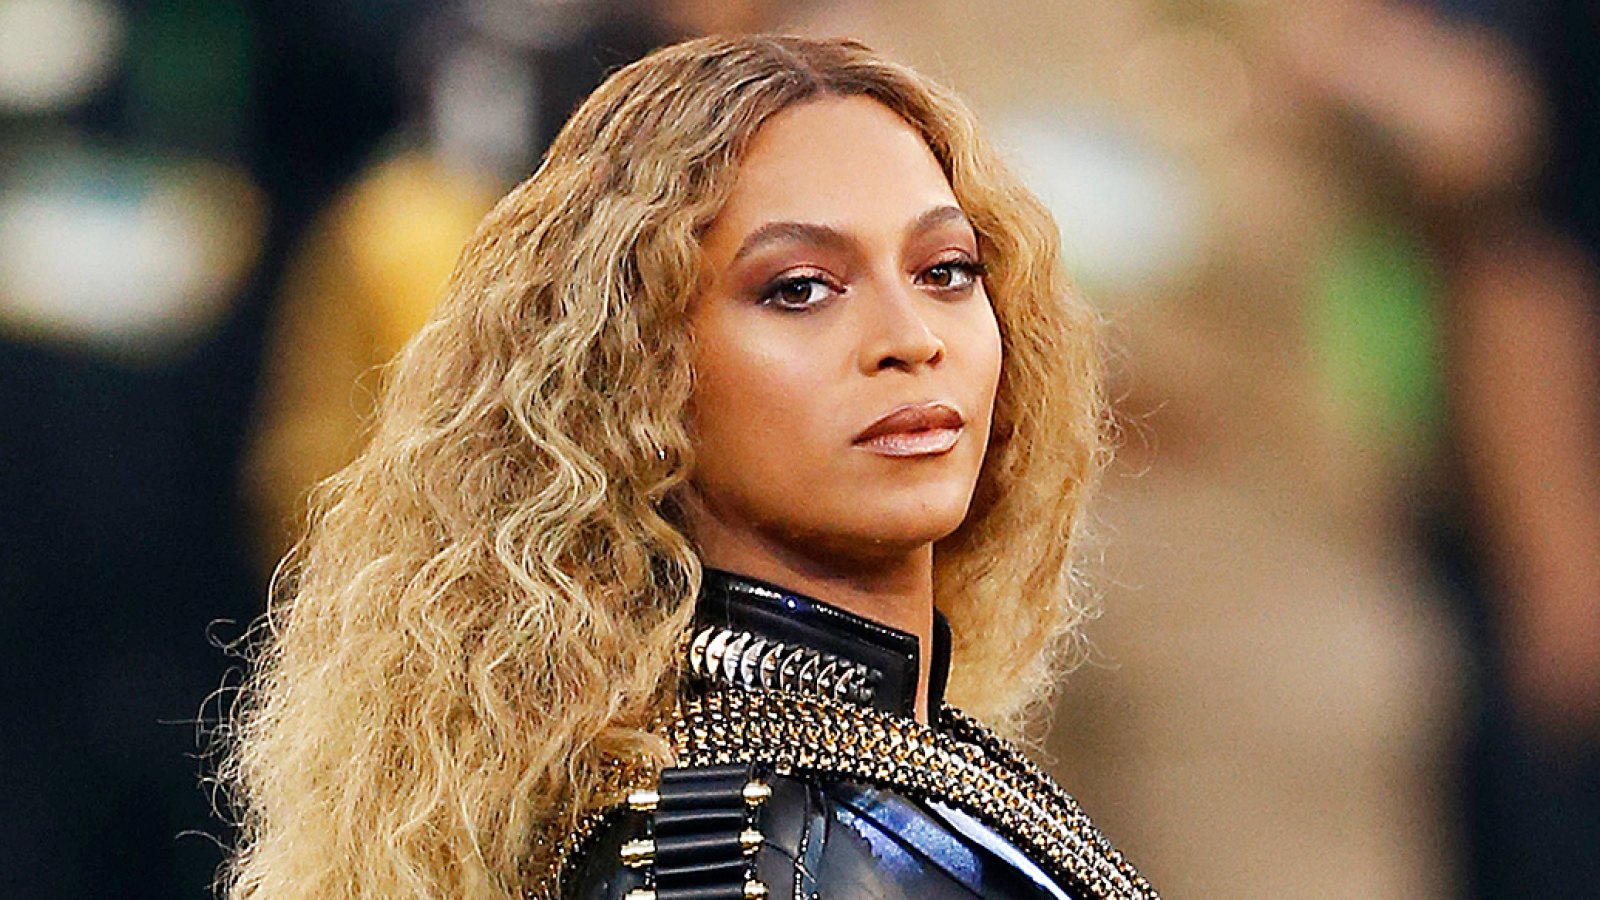 Black Panthers Party Explained - Beyoncé's Formation Superbowl Performance